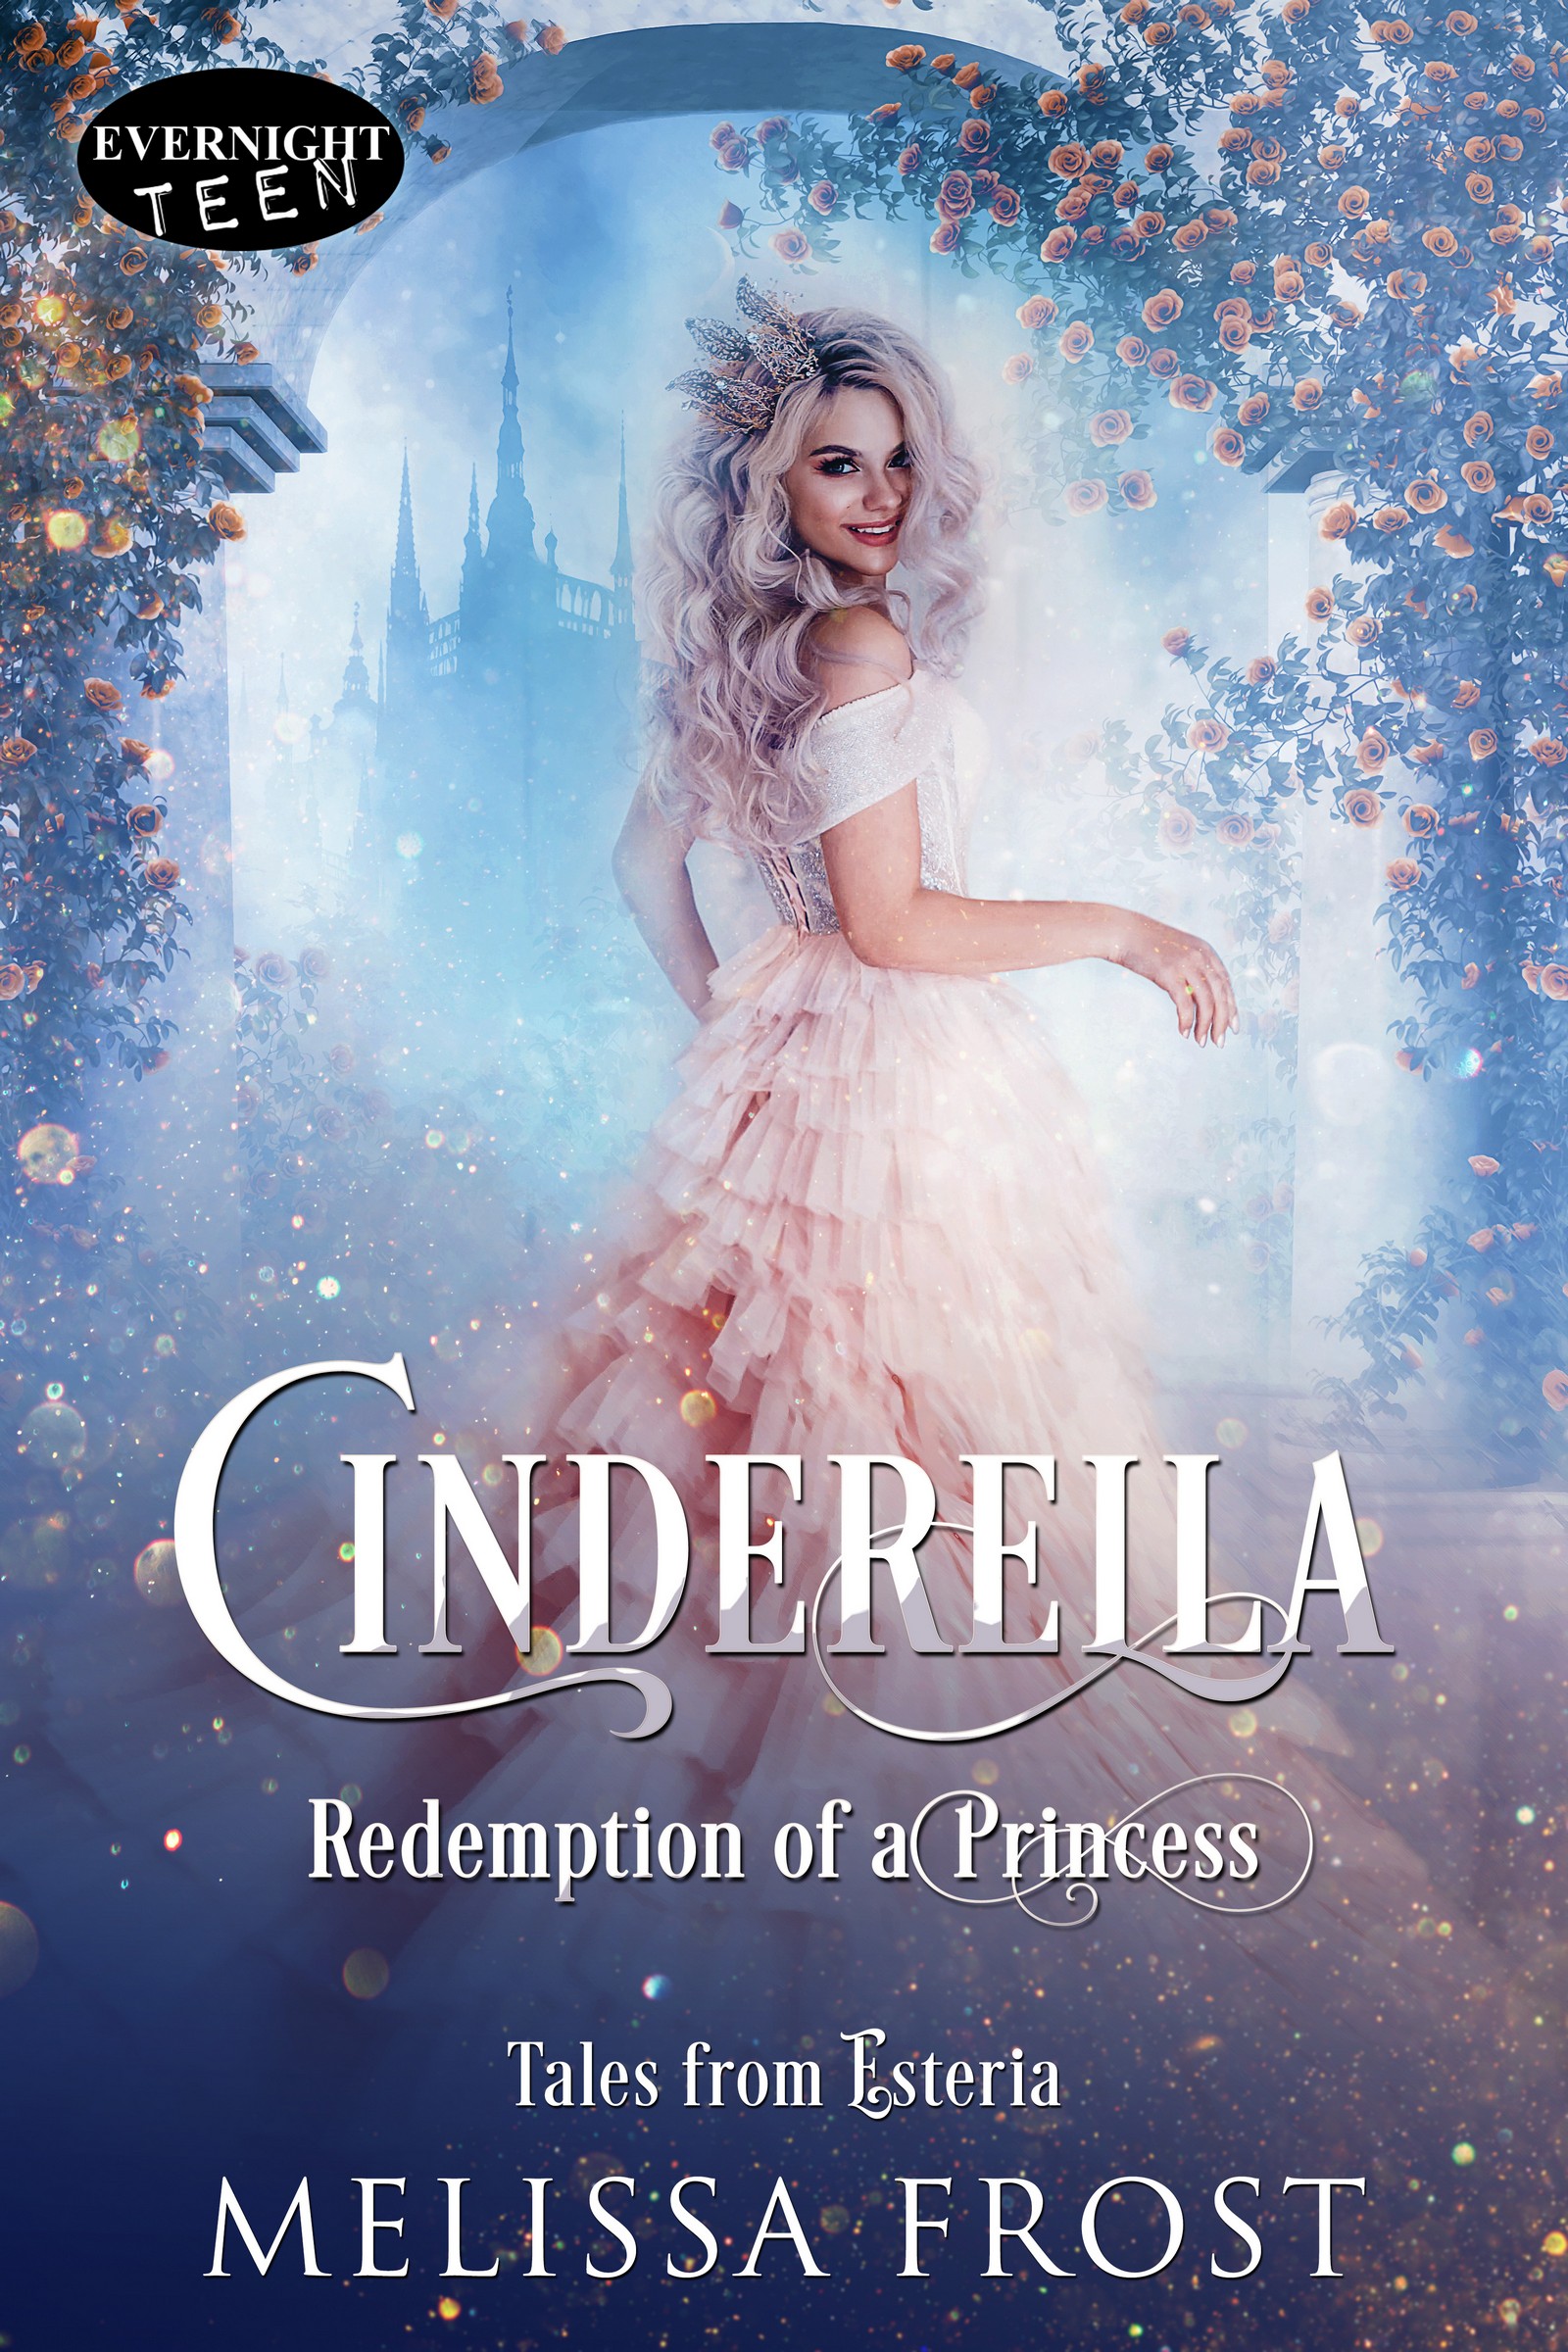 Cinderella by Melissa Frost - Evernight Teen